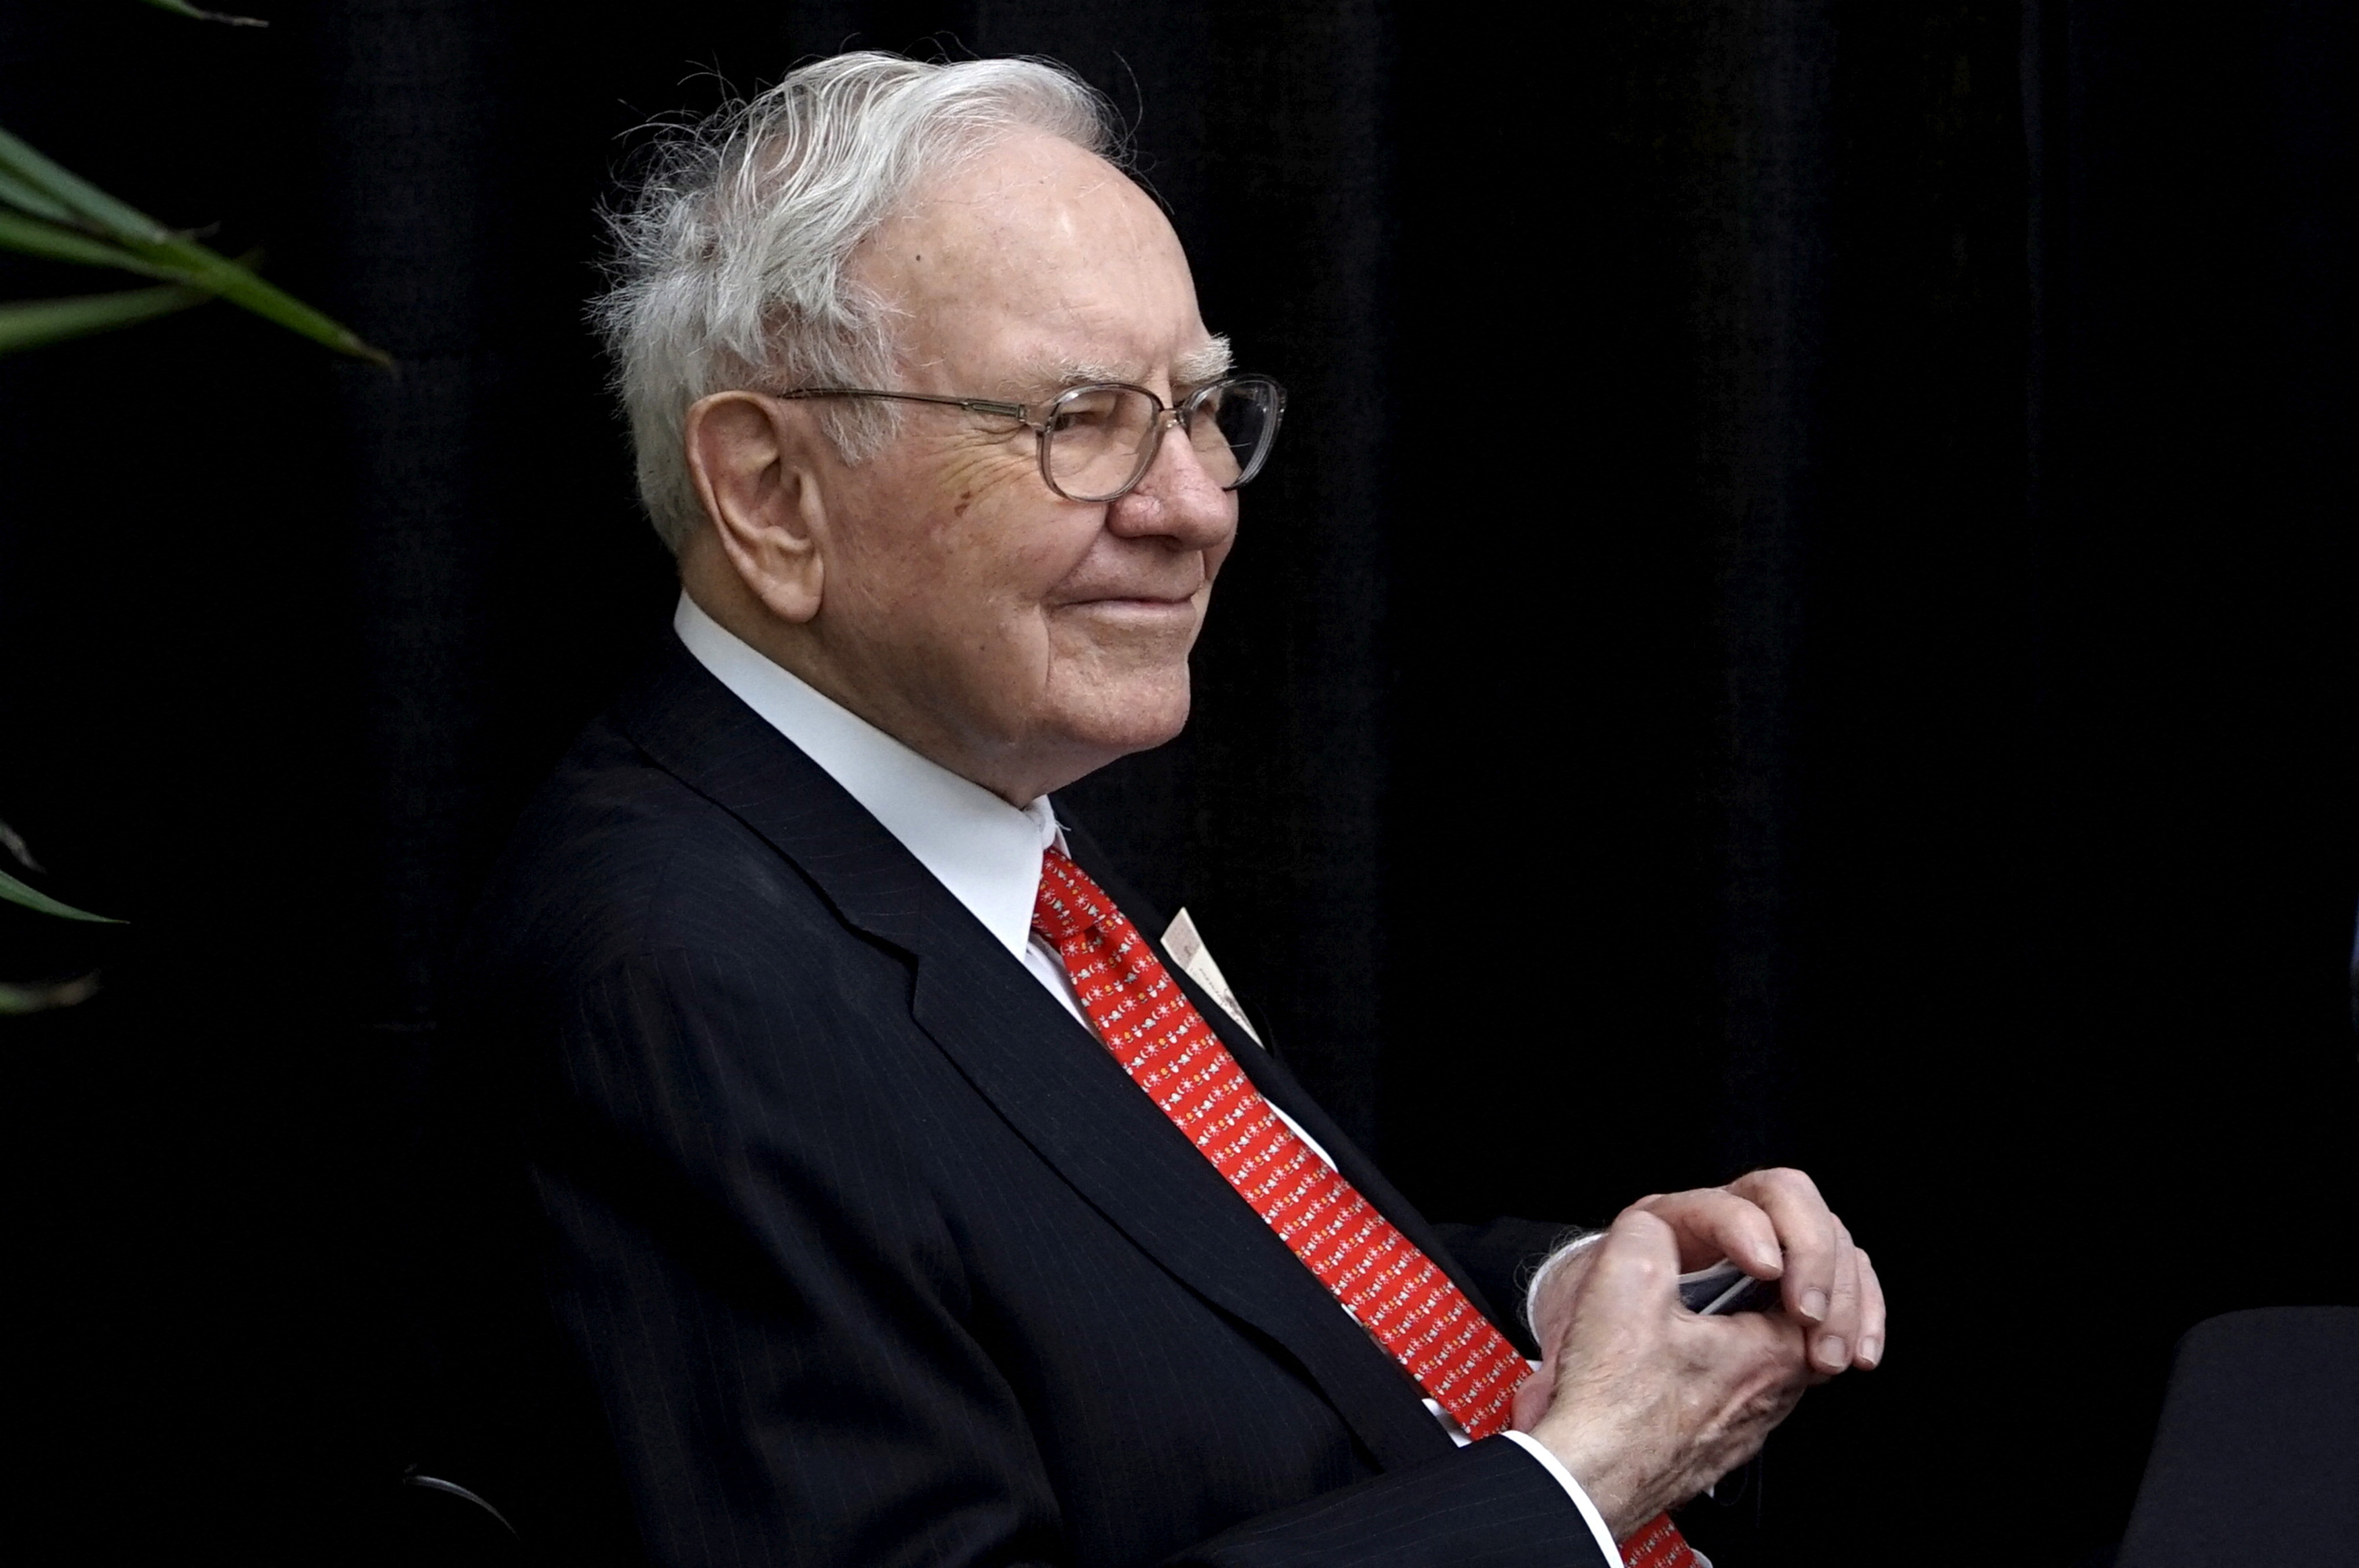 Berkshire Hathaway CEO Warren Buffett plays bridge during the Berkshire annual meeting weekend in Omaha, Nebraska